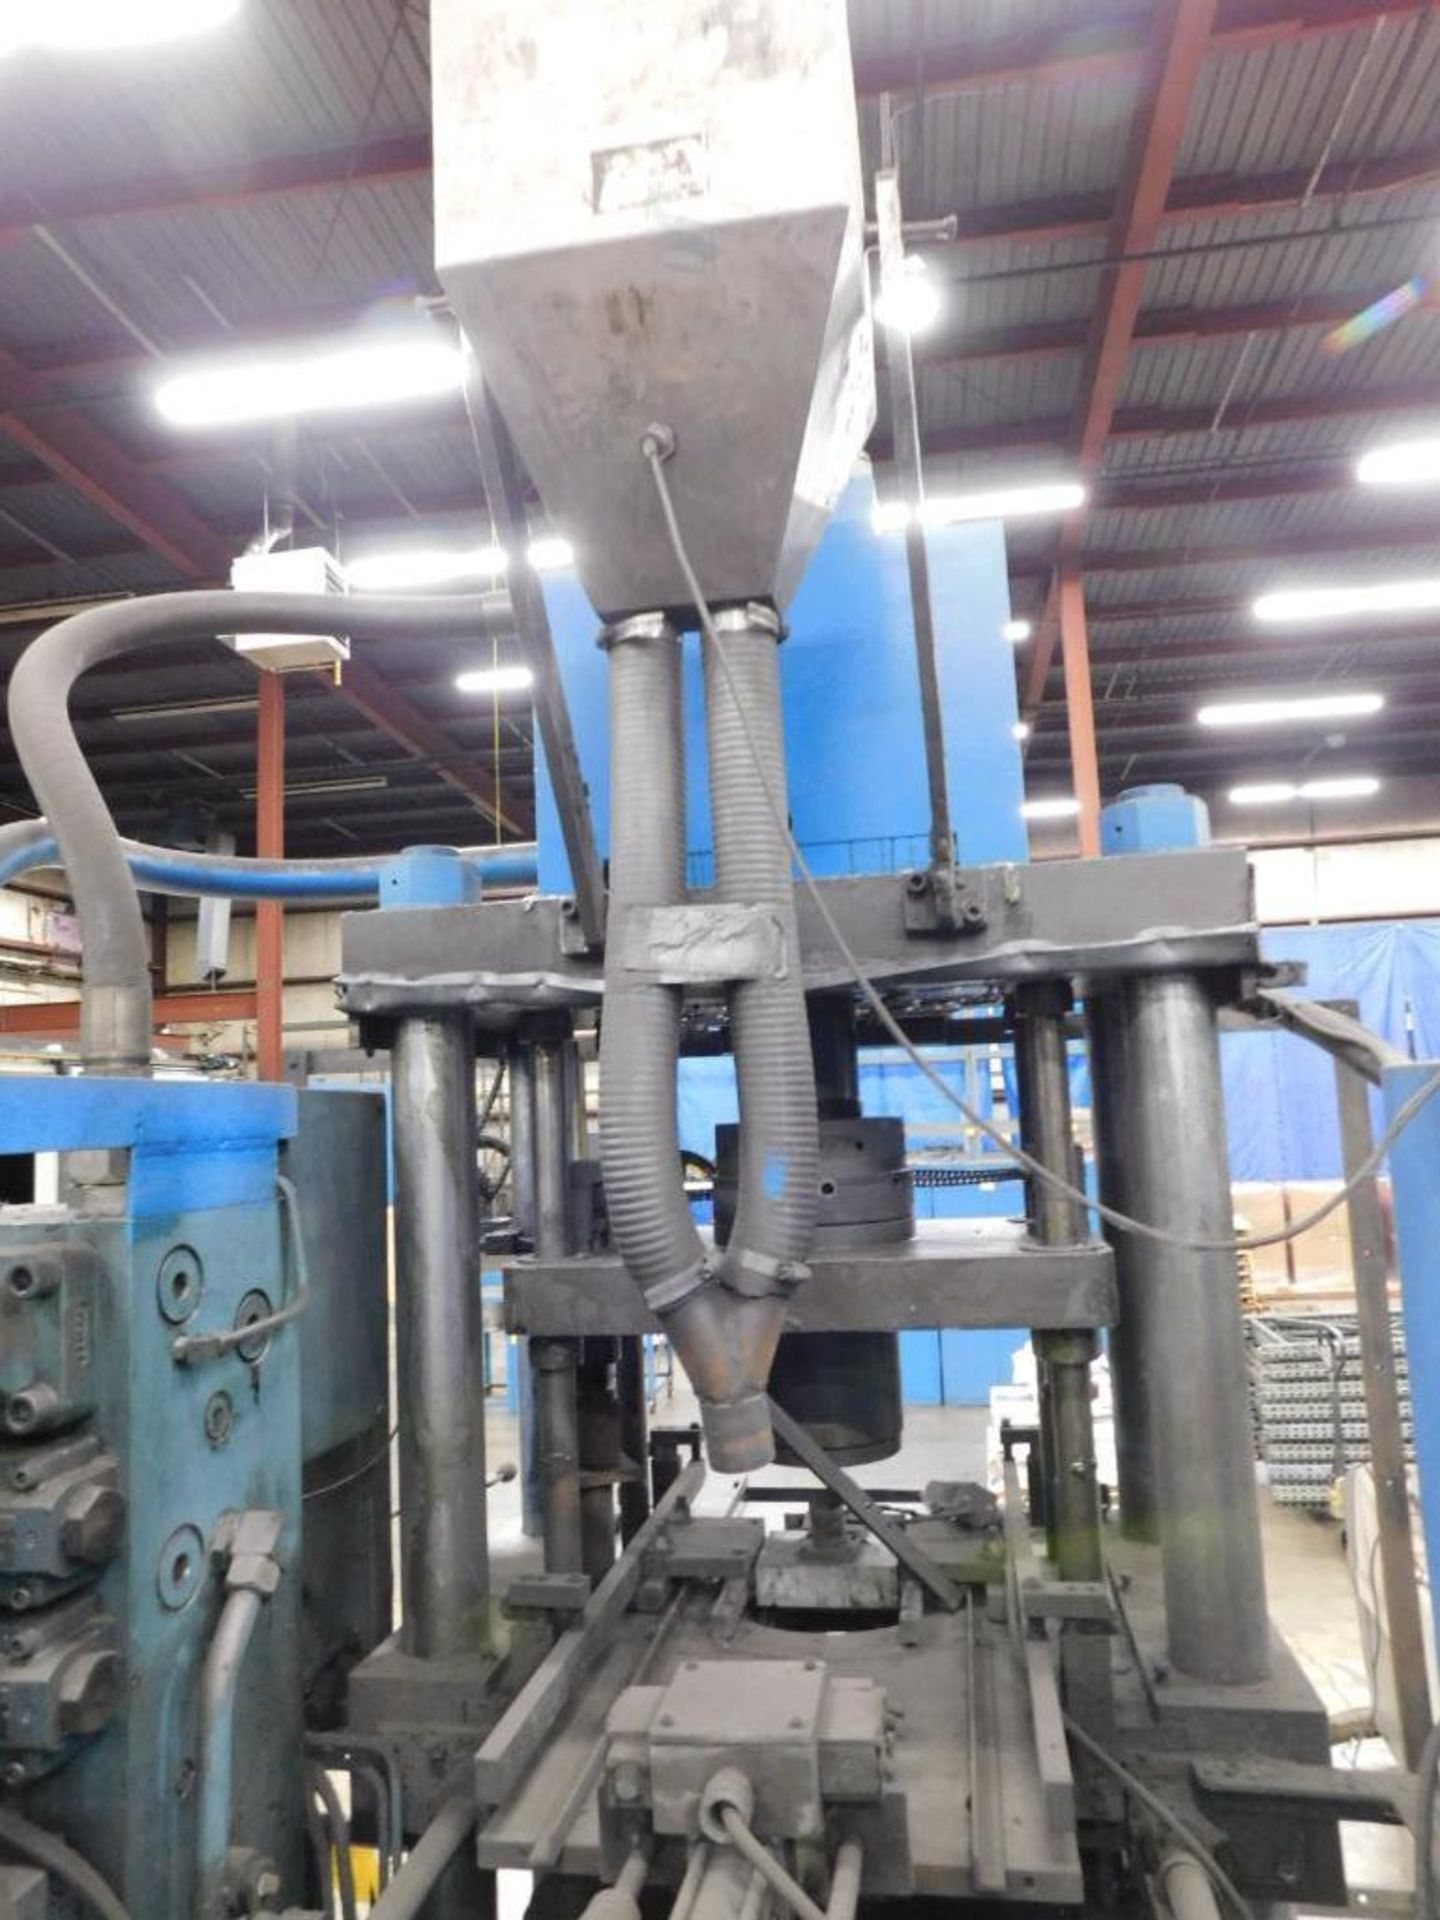 Hydramet Powder Compacting Press, Hydraulic, Model HC-60, 60 Ton Maximum Pressing Force, 5" Maximum - Image 8 of 21